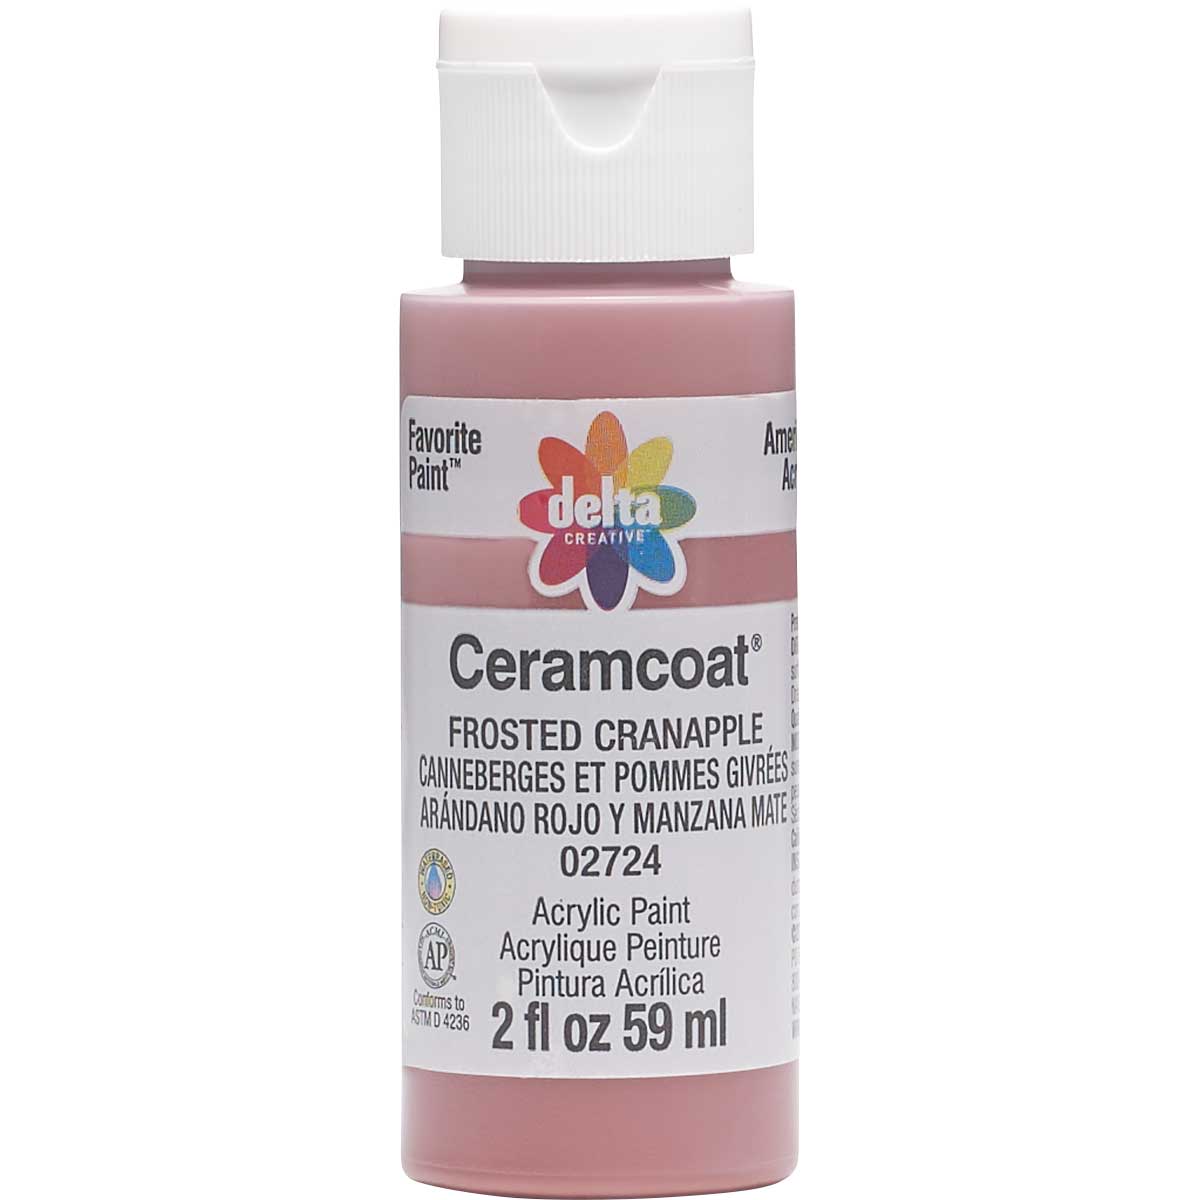 Delta Ceramcoat Acrylic Paint - Frosted Cranapple, 2 oz. - 02724